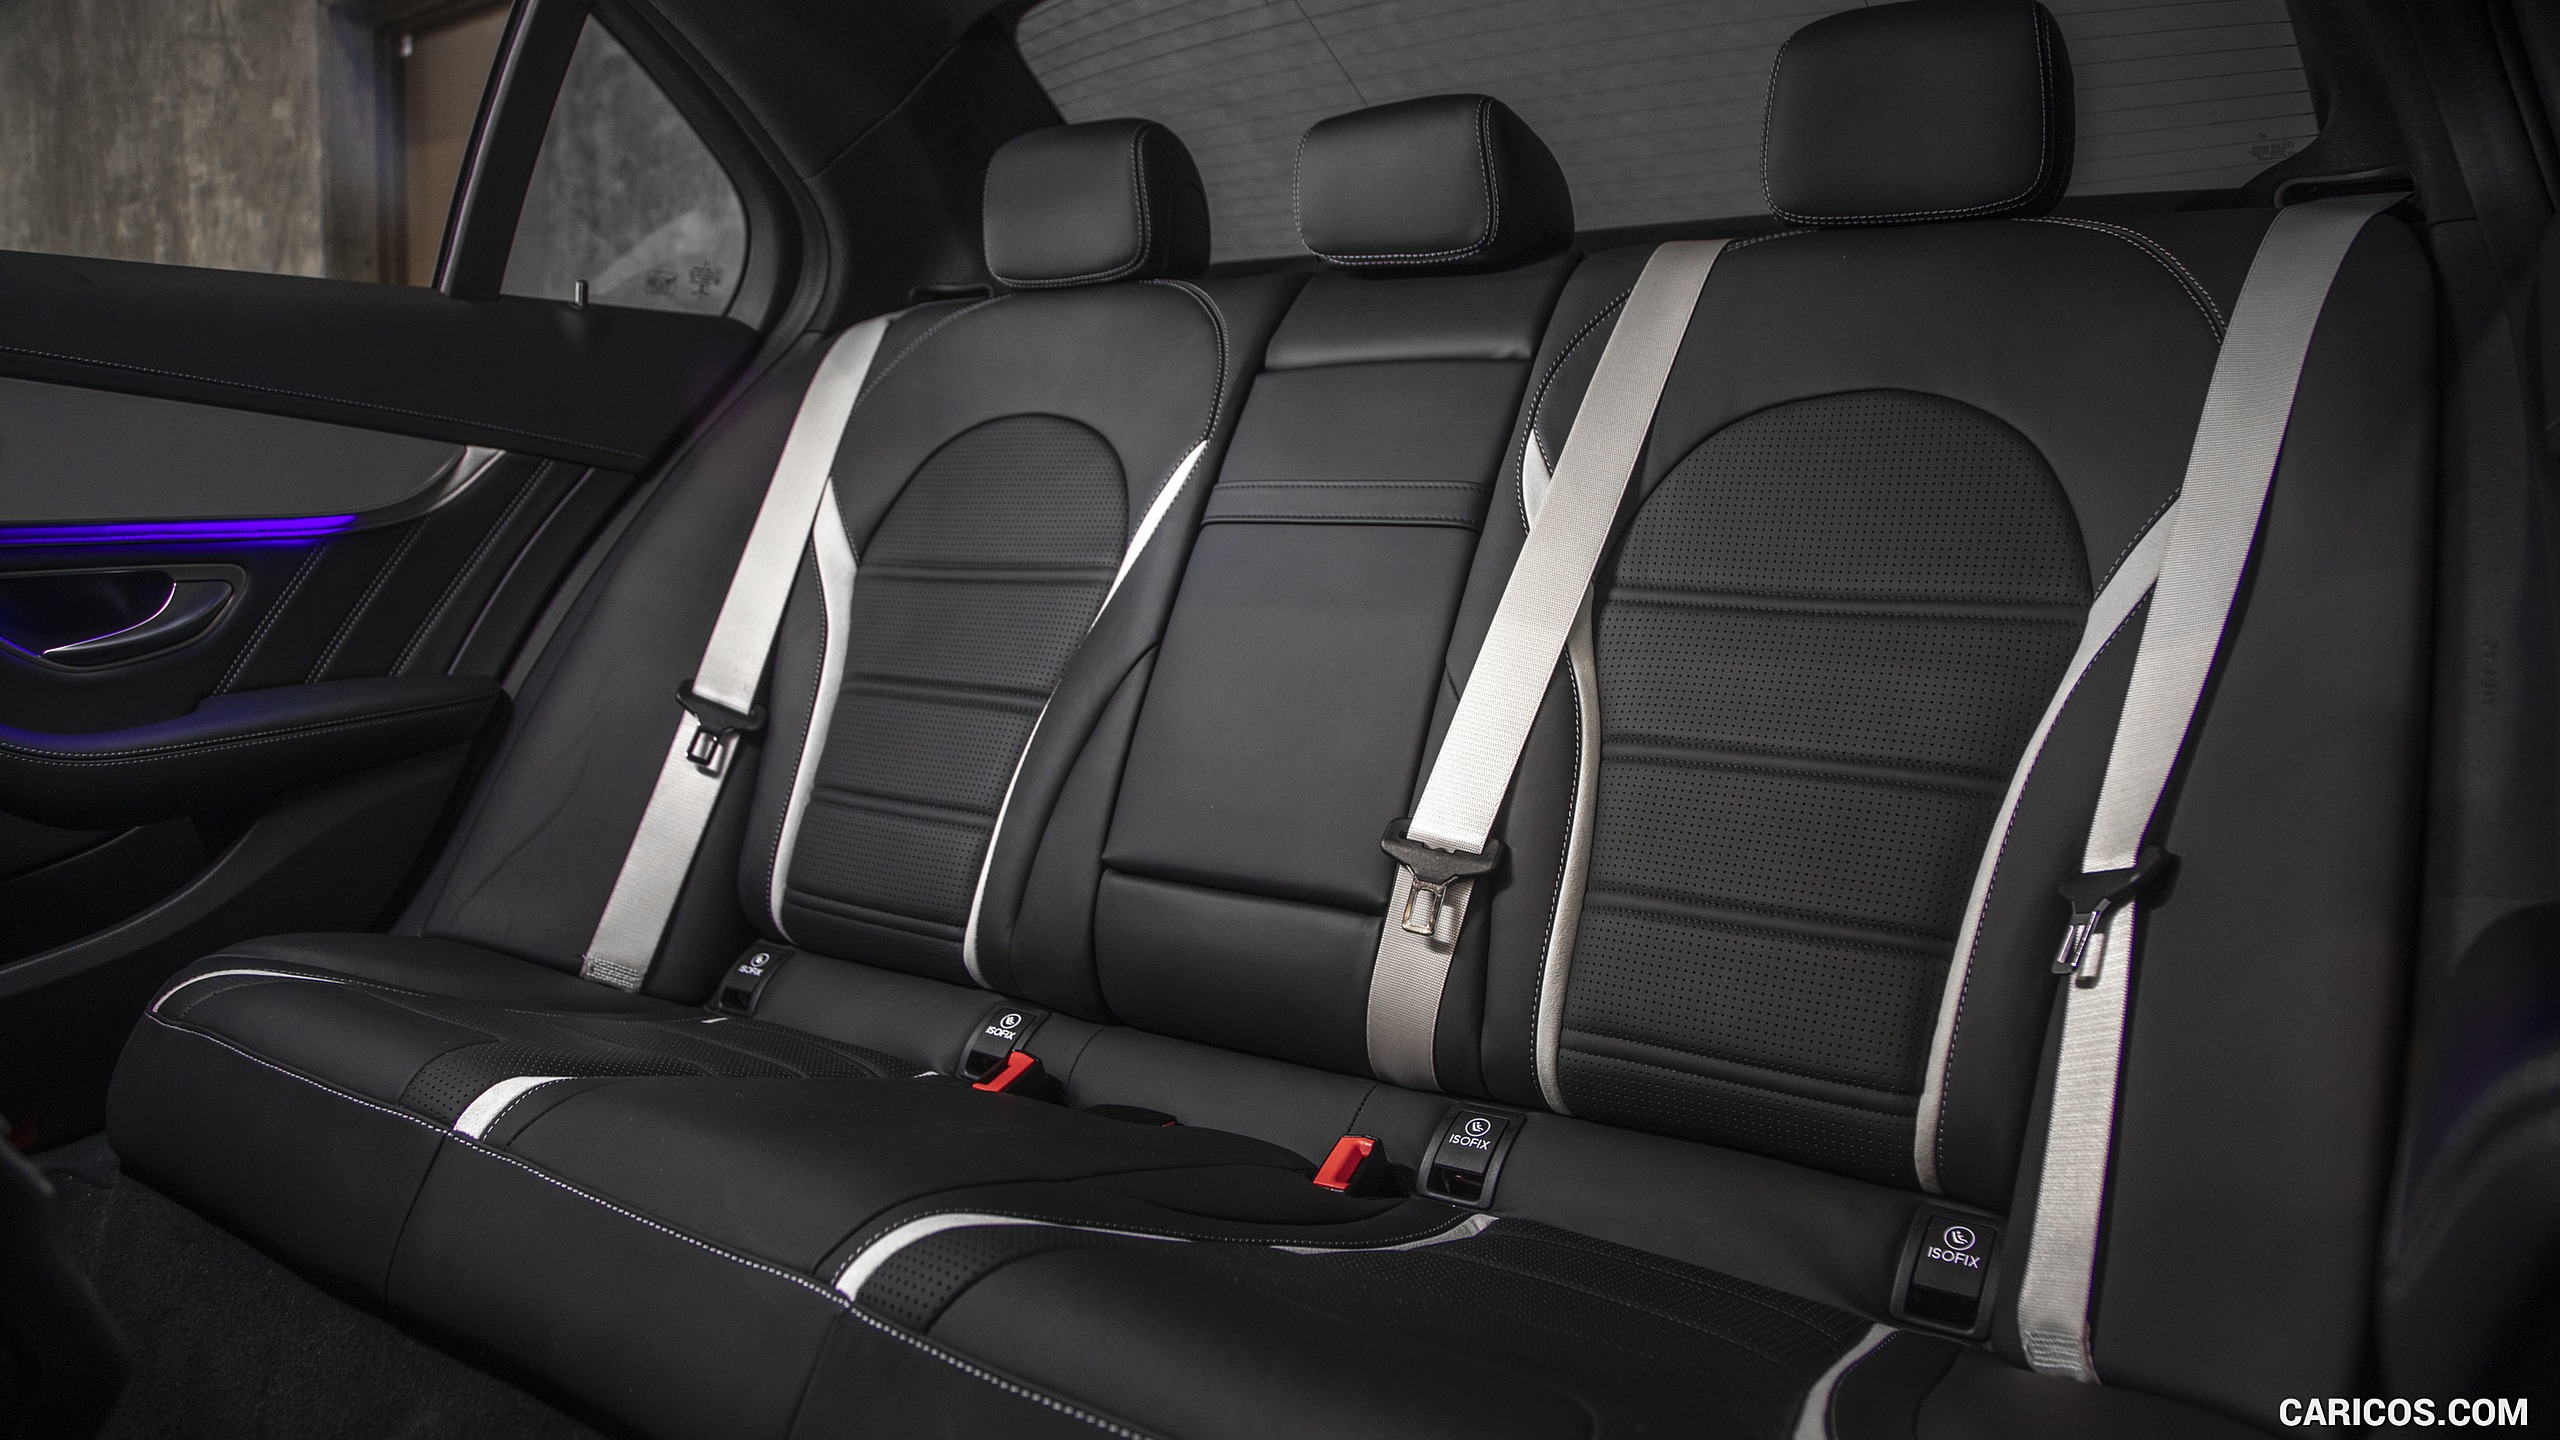 2019 Mercedes-AMG C63 S Sedan (US-Sedan) - Interior, Rear Seats, #107 of 115